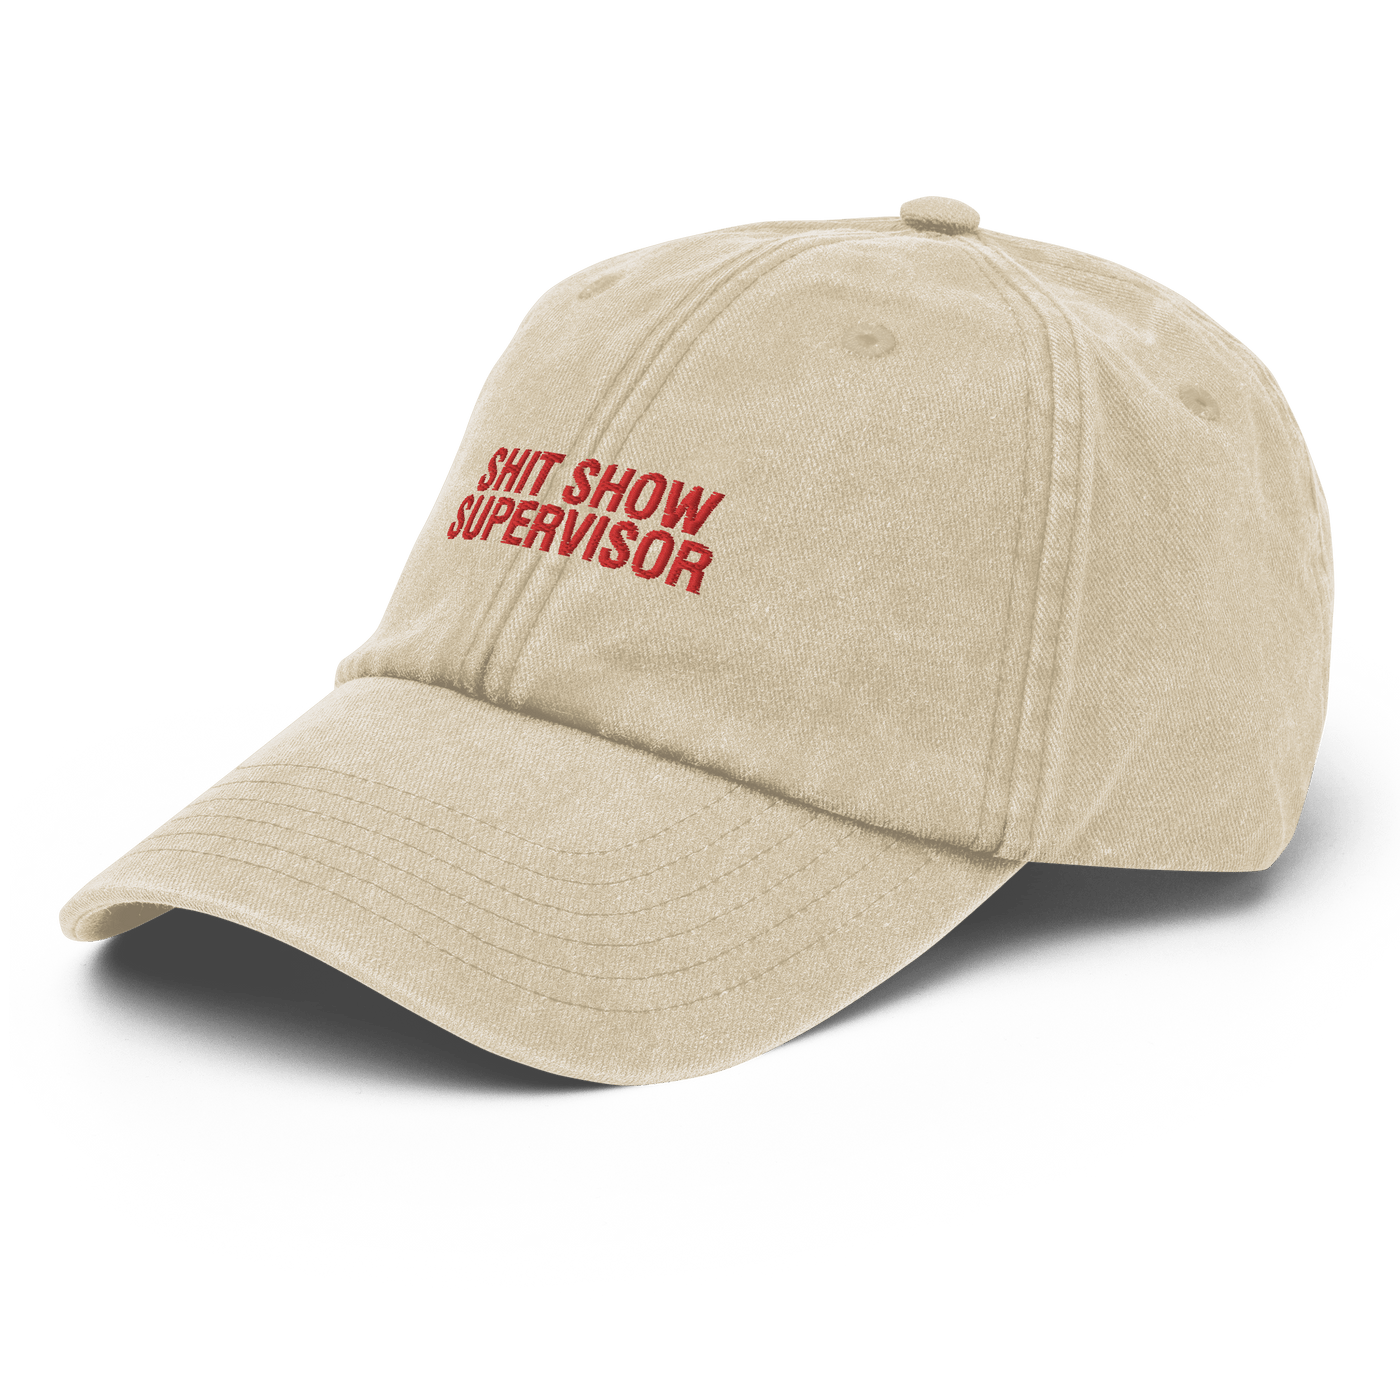 Shit Show Supervisor Vintage Hat - Vintage Stone - Just Another Cap Store